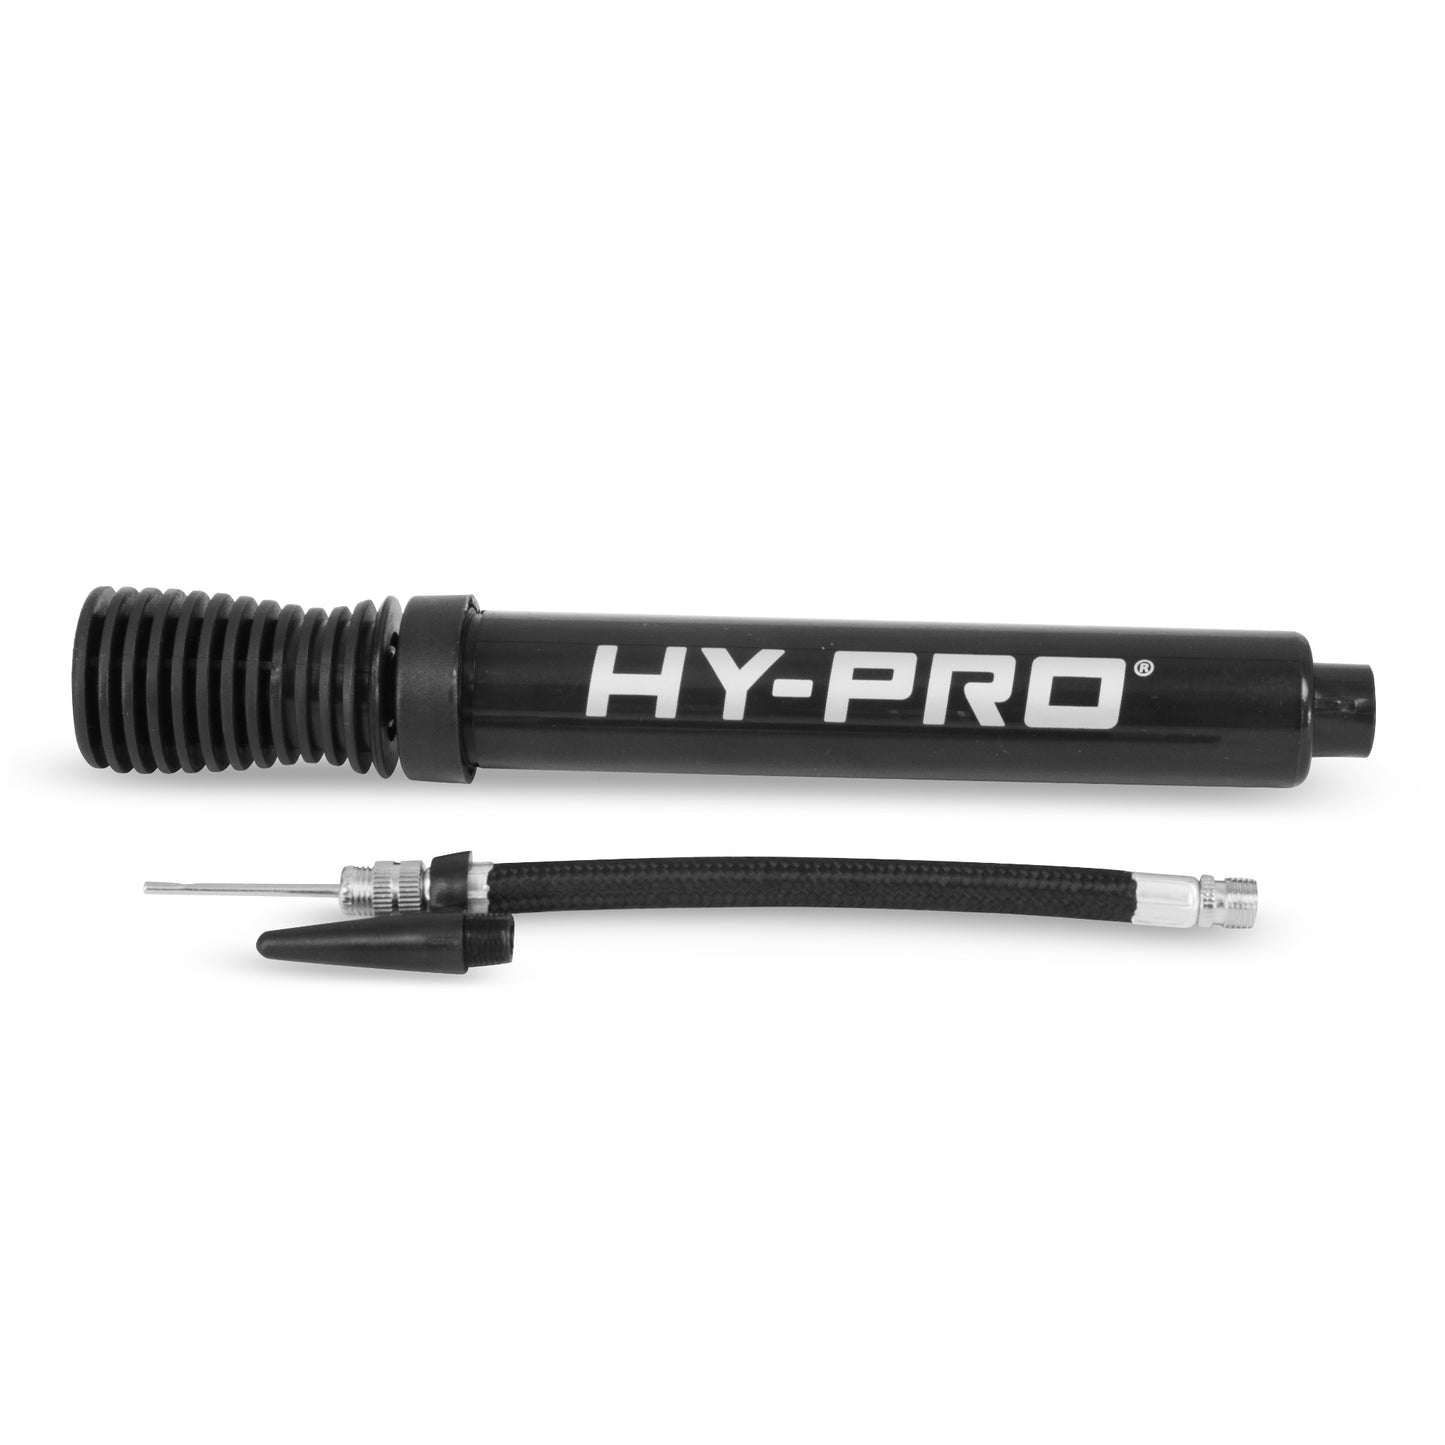 Hy-Pro Dual Action Pump